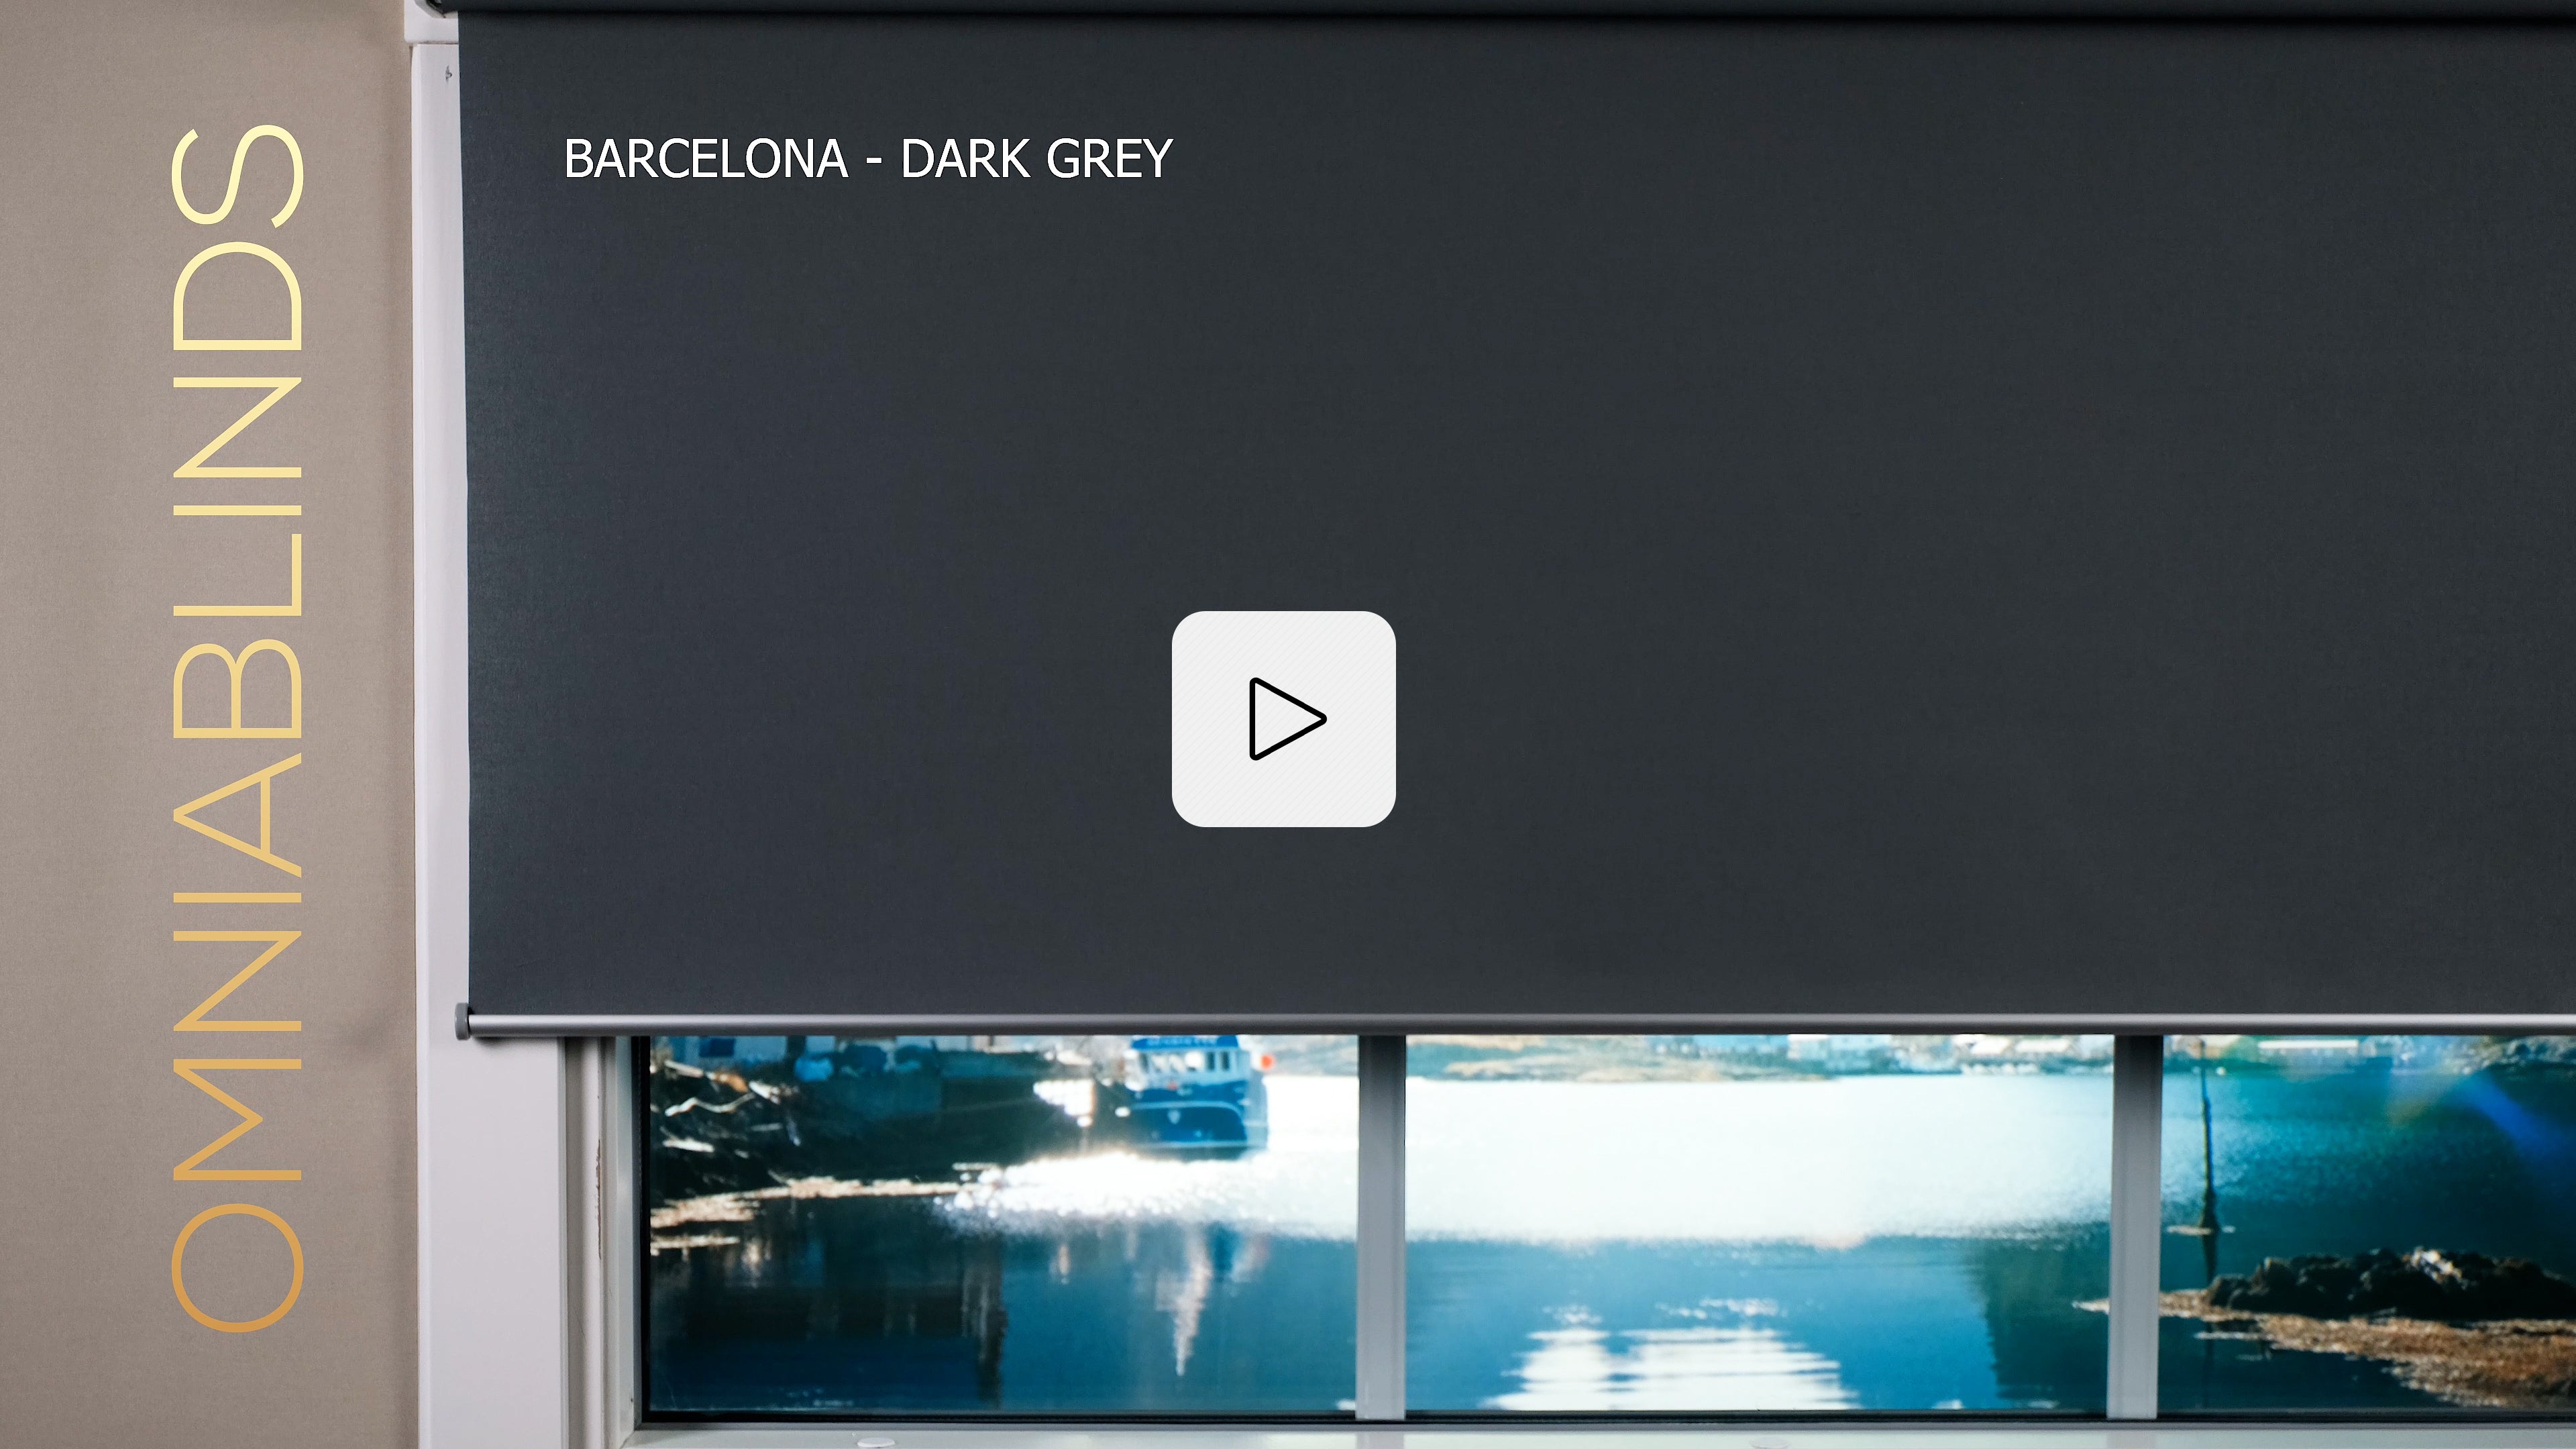 Barcelona - Dark Grey